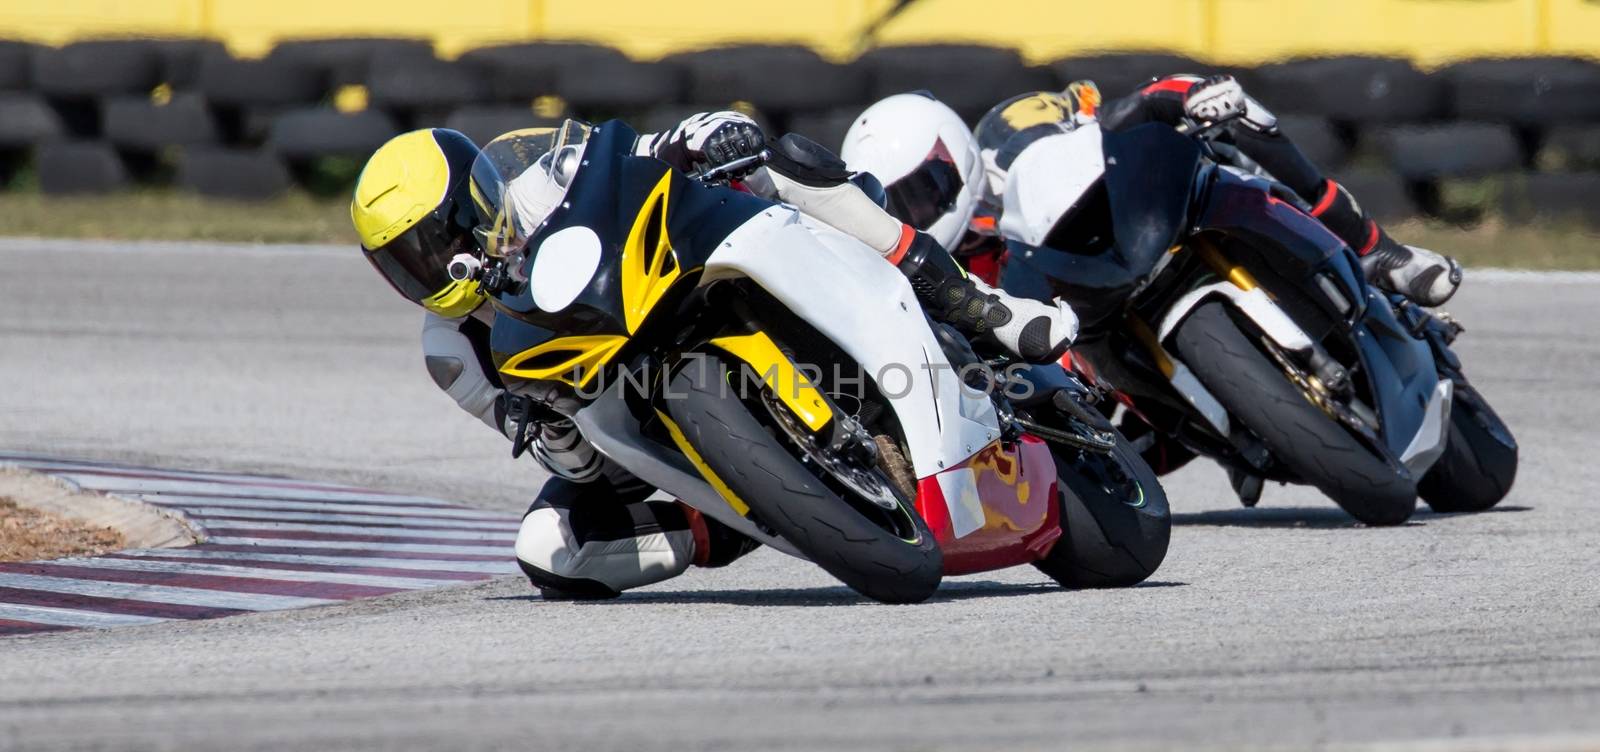 Mototbikes Racing on Track by fouroaks